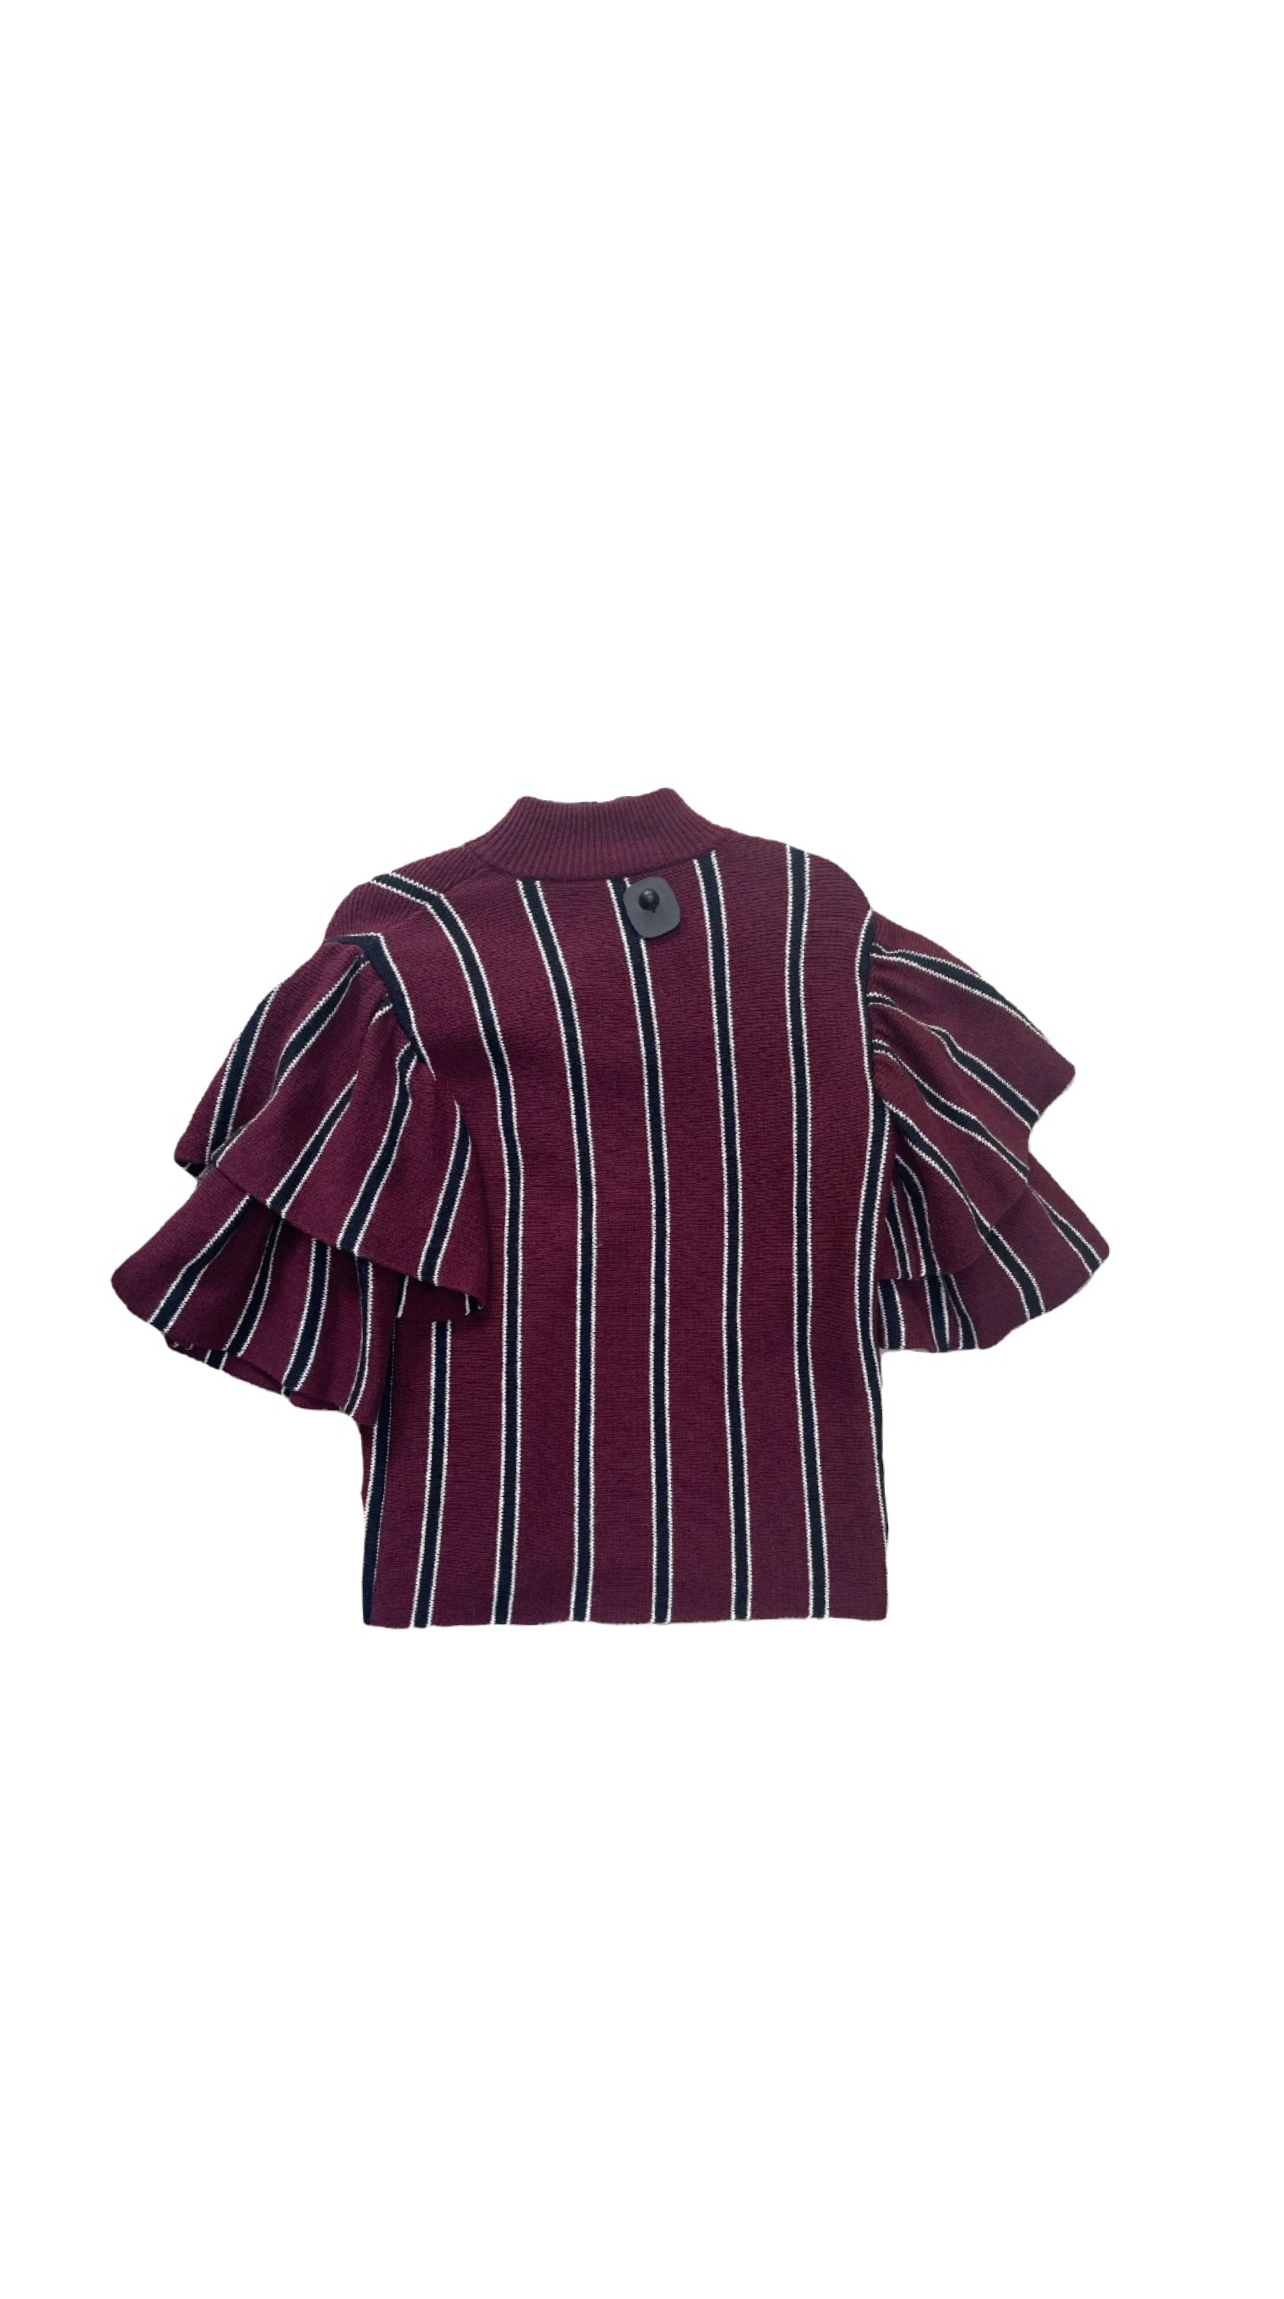 SELF-PORTRAIT 2016 Striped Sweater